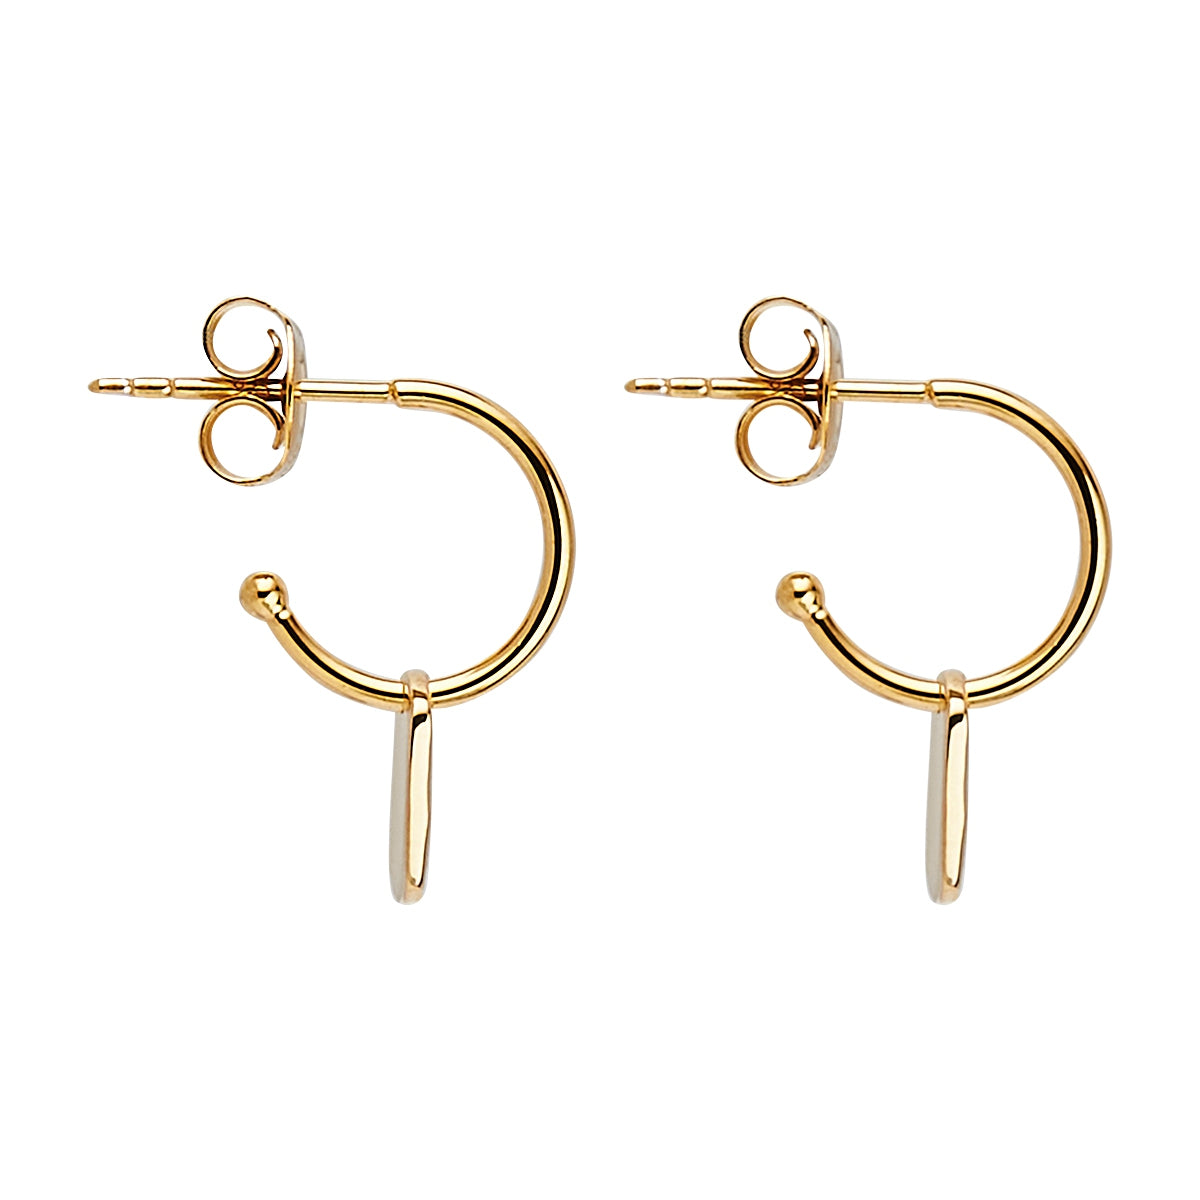 NAJO Tigger Yellow Gold Earrings E6545